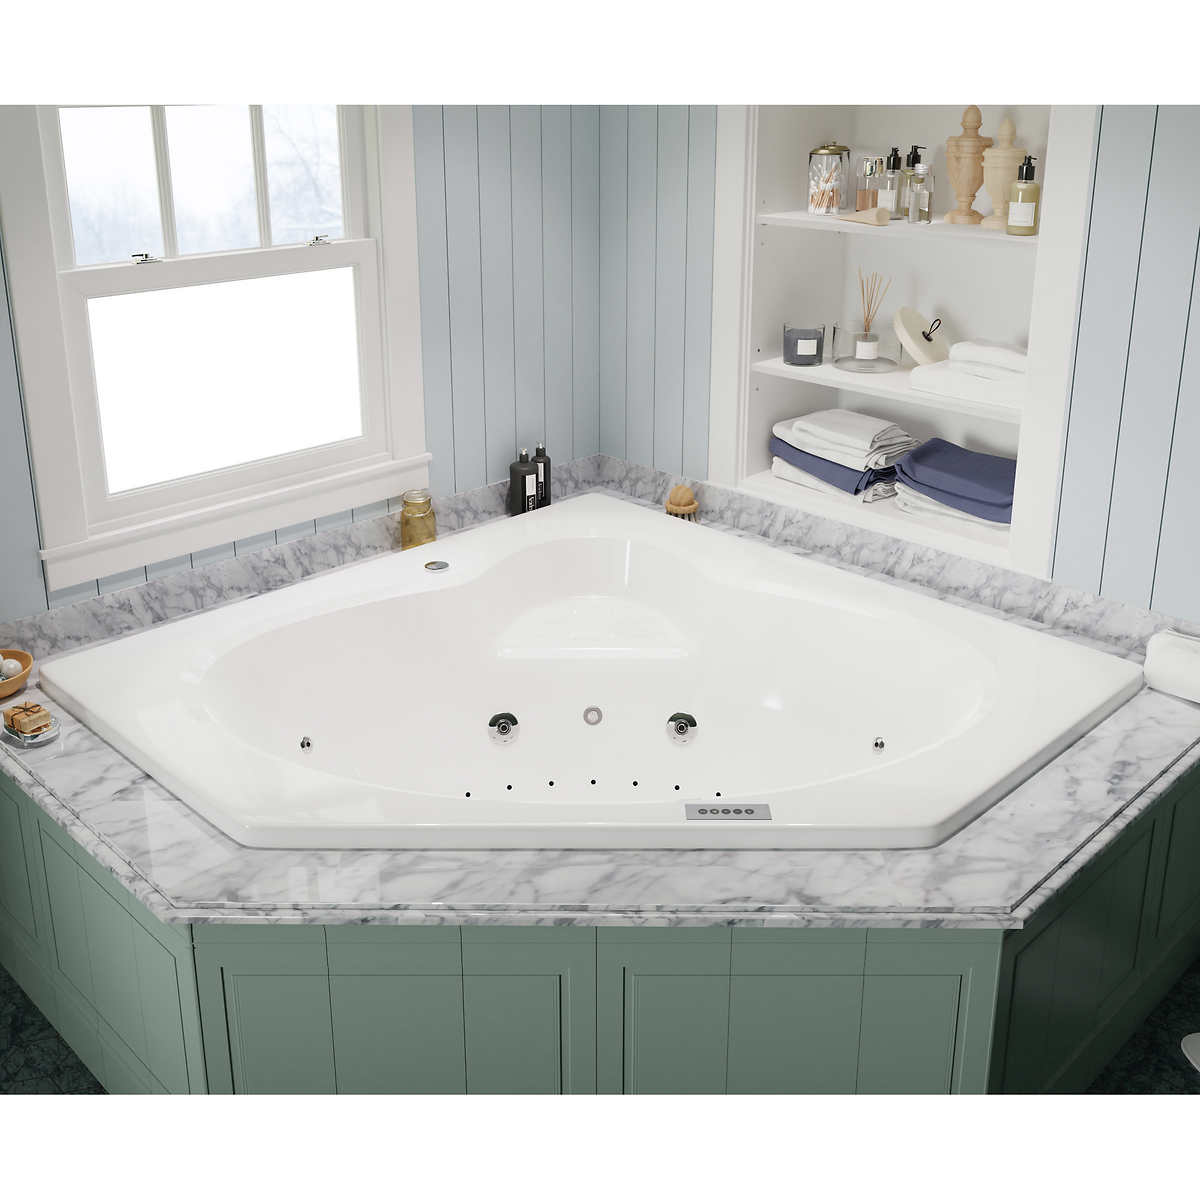 Dual Feature Whirlpool Bathtub Costco, How To Choose A Whirlpool Bathtub